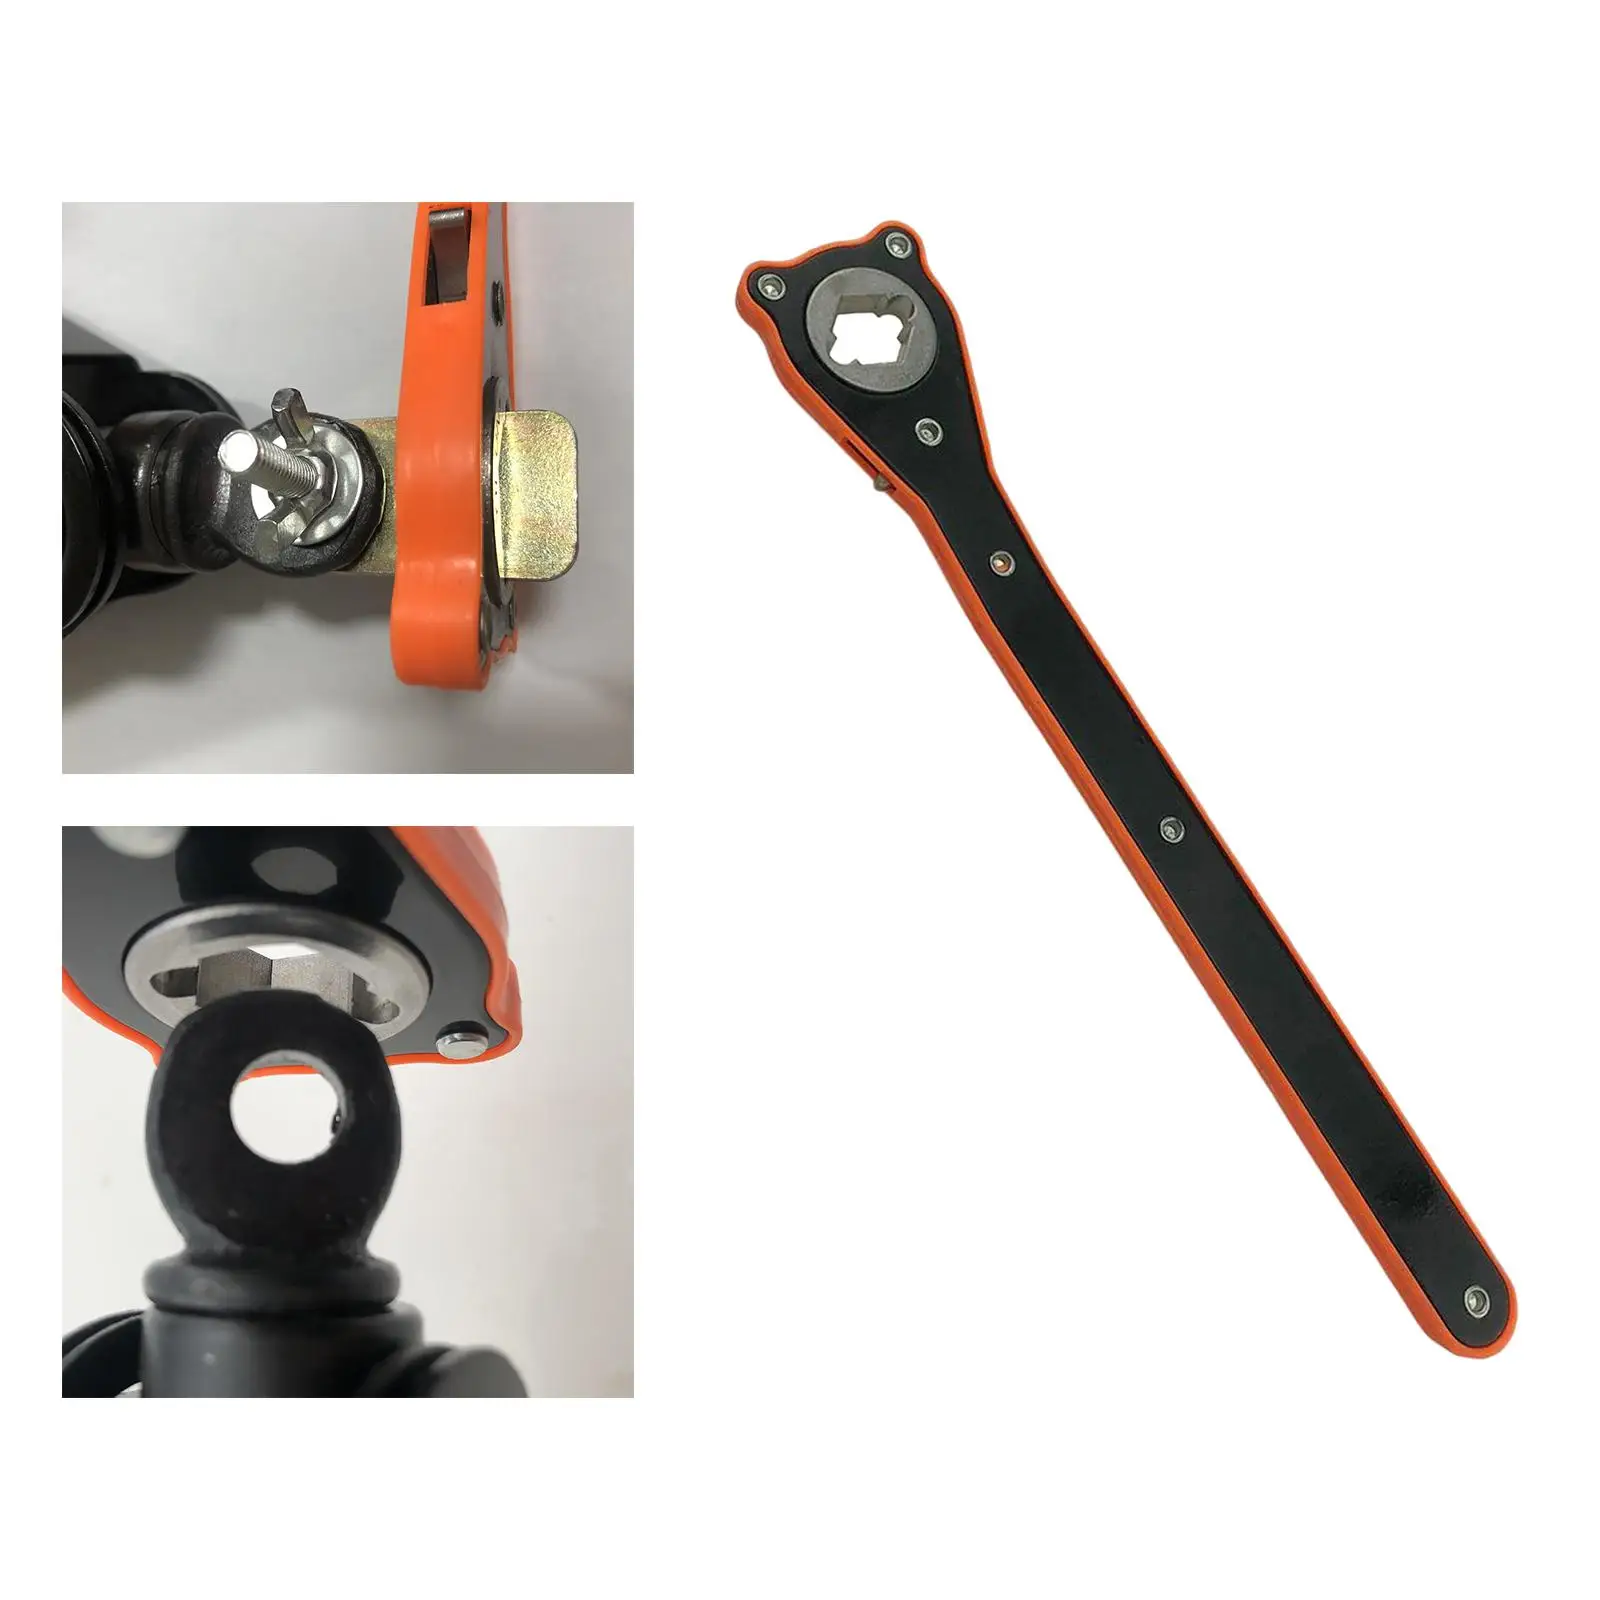 2 in 1 Car Jack Ratchet Wrench Labor saving Scissor Jack Garage Tire Wheel Lug Wrench Handle Auto Repair Tool